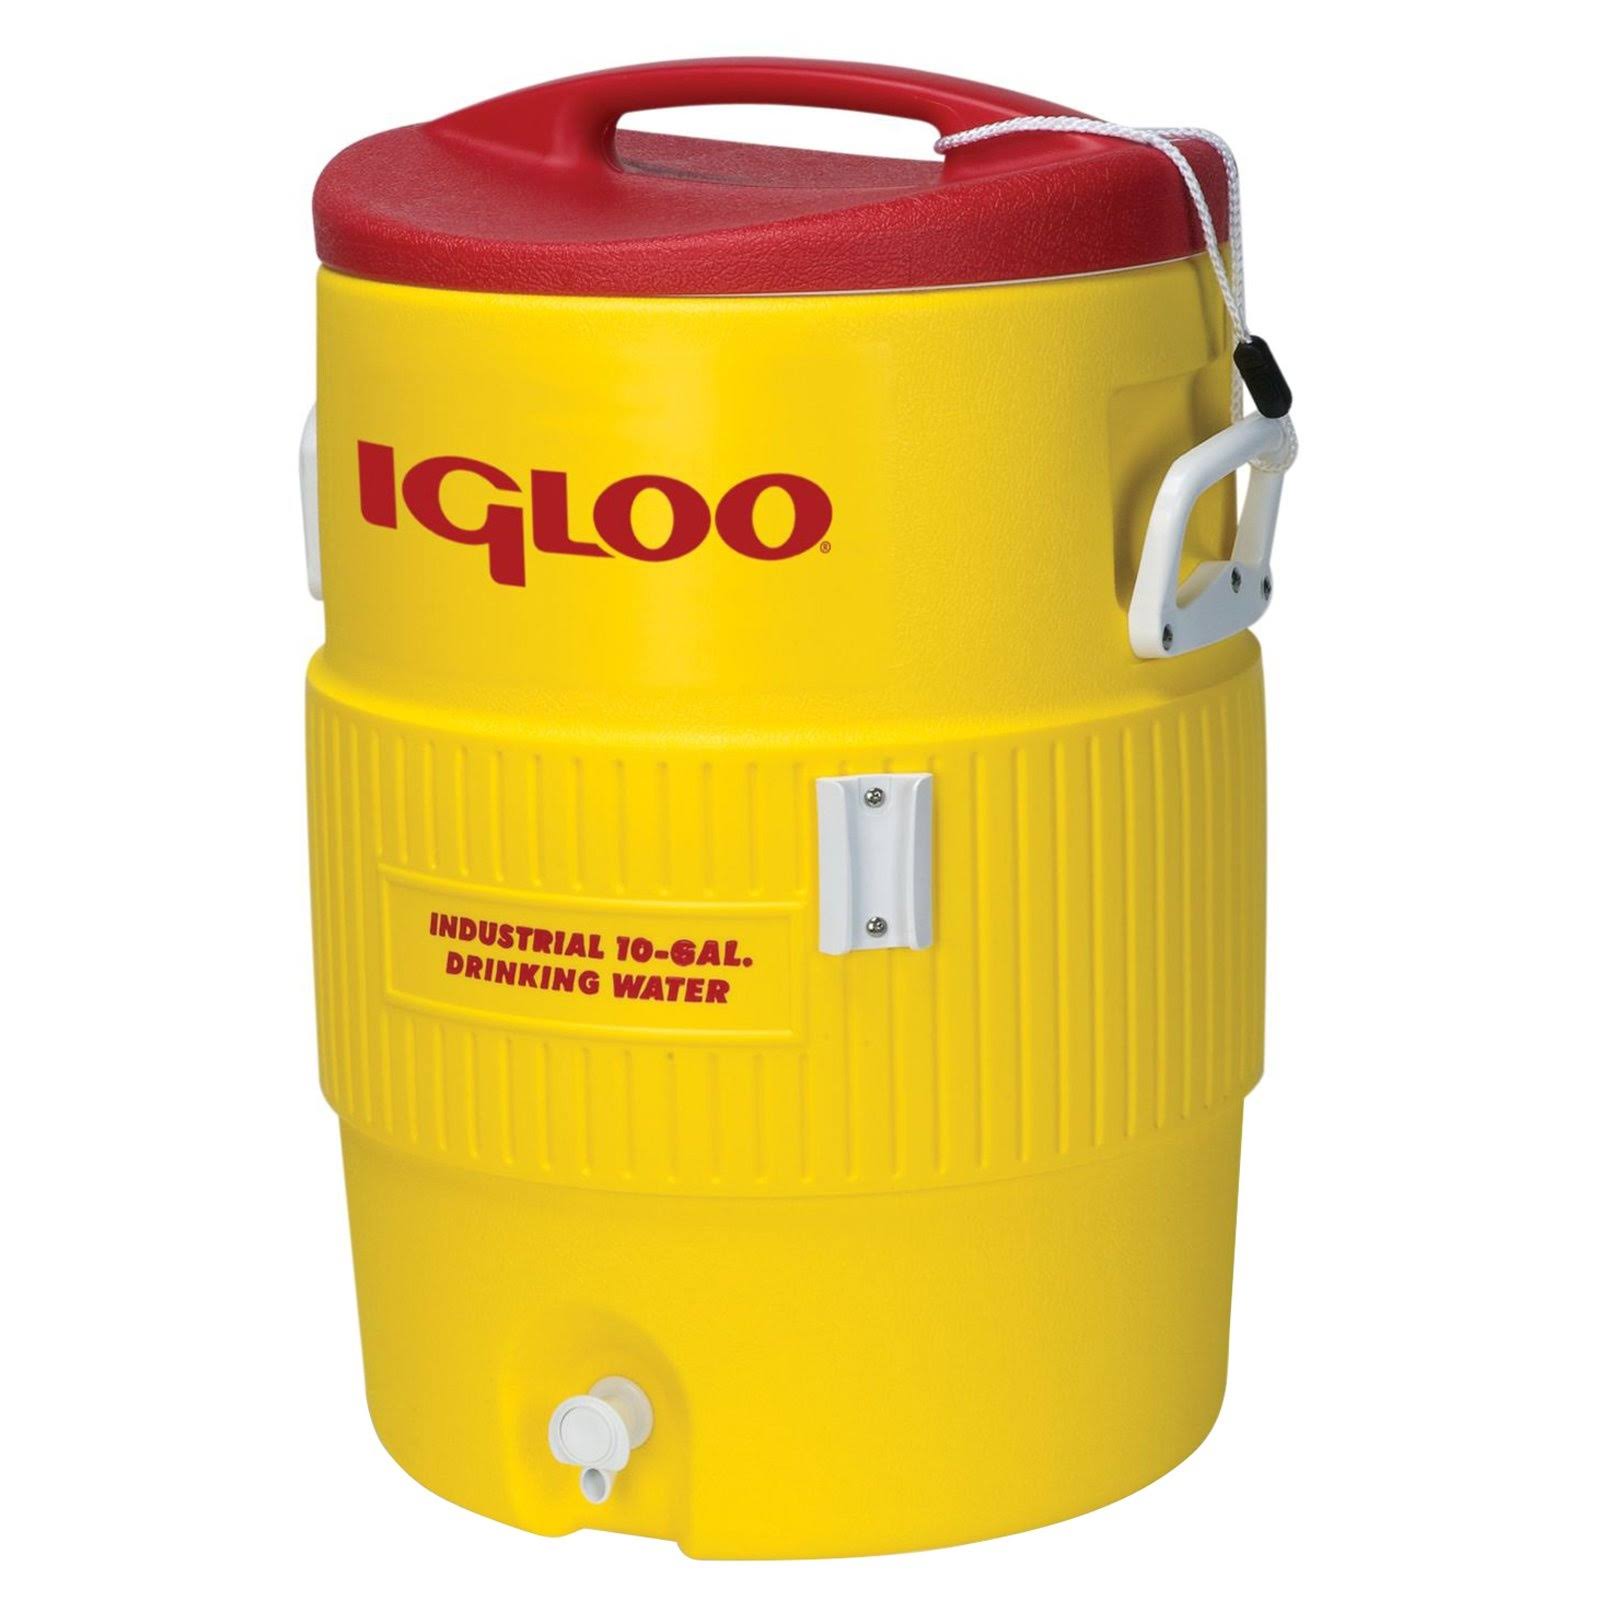 Igloo Industrial Water Cooler - 10gal